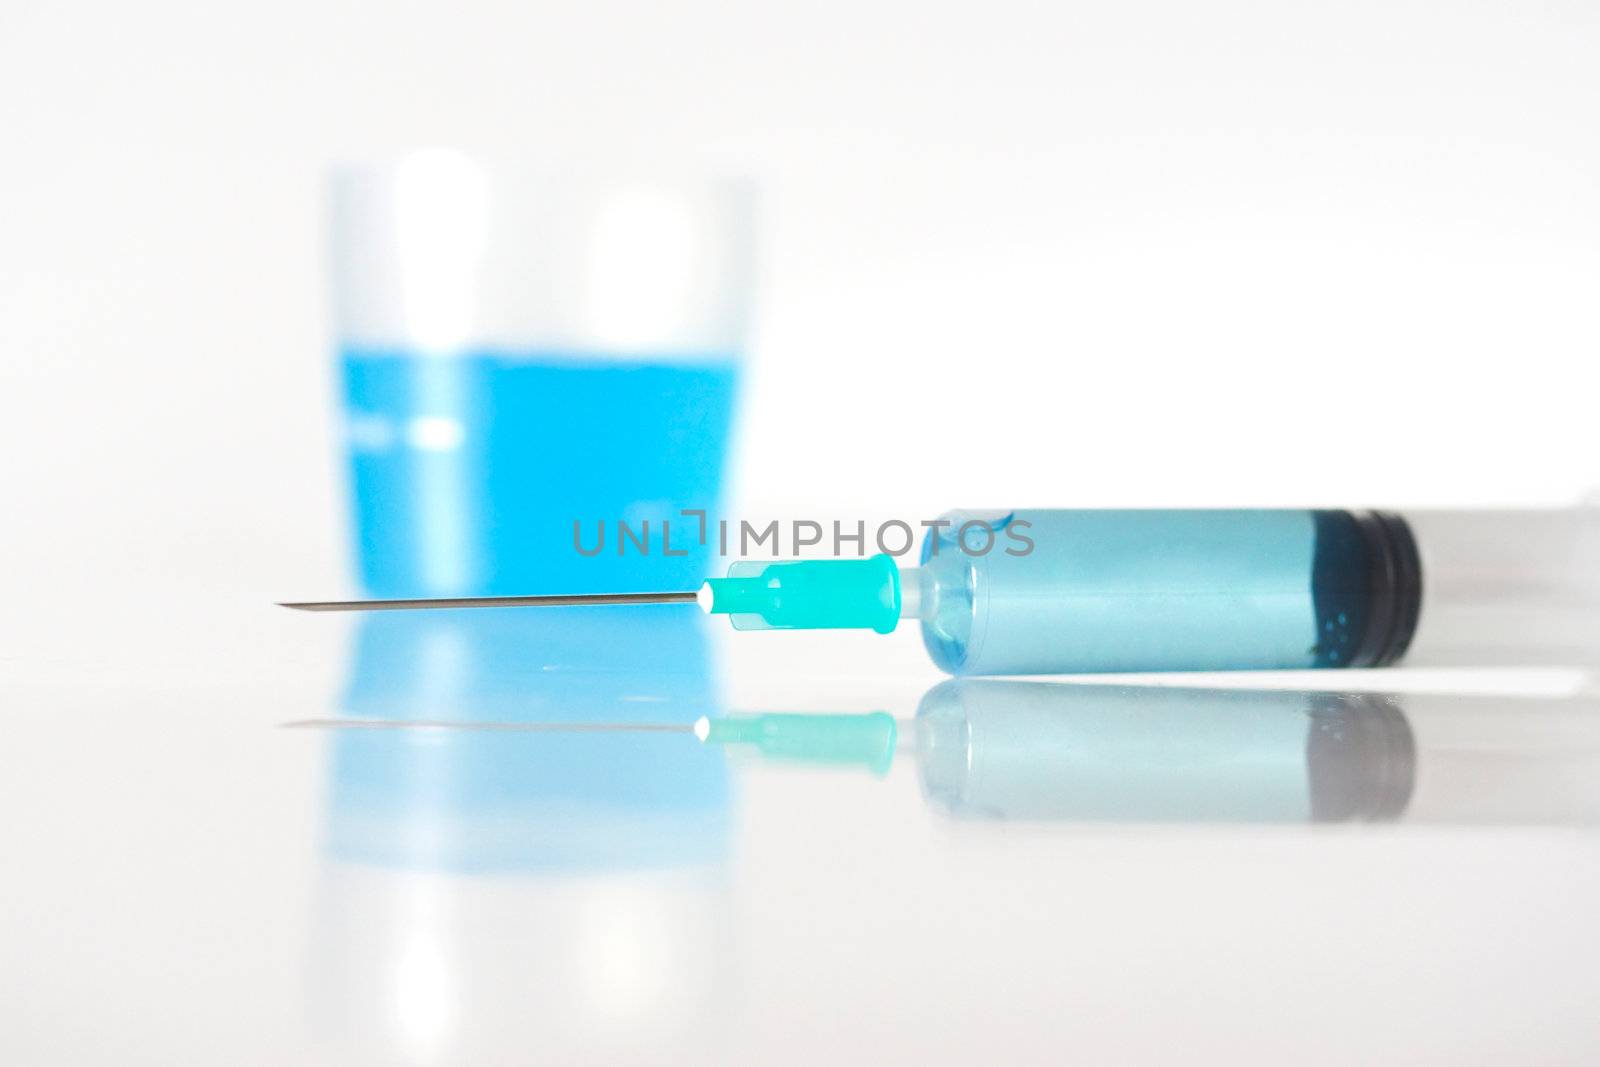 Syringe with blue liquid